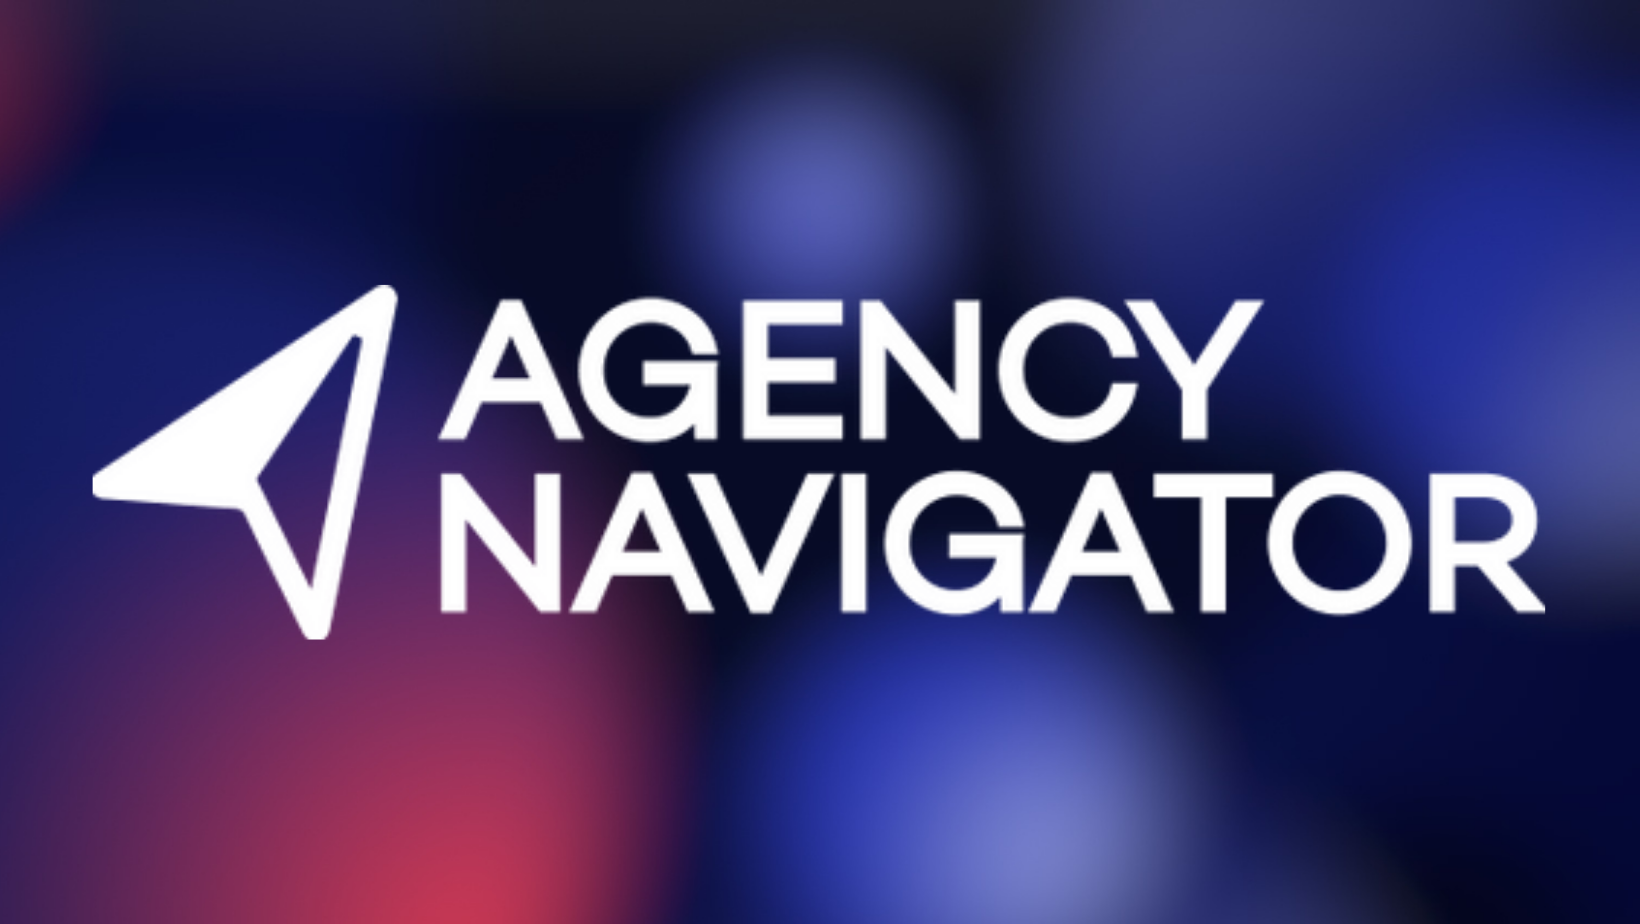 FREE Agency Navigator Updated Course - Iman Gadzhi 2022